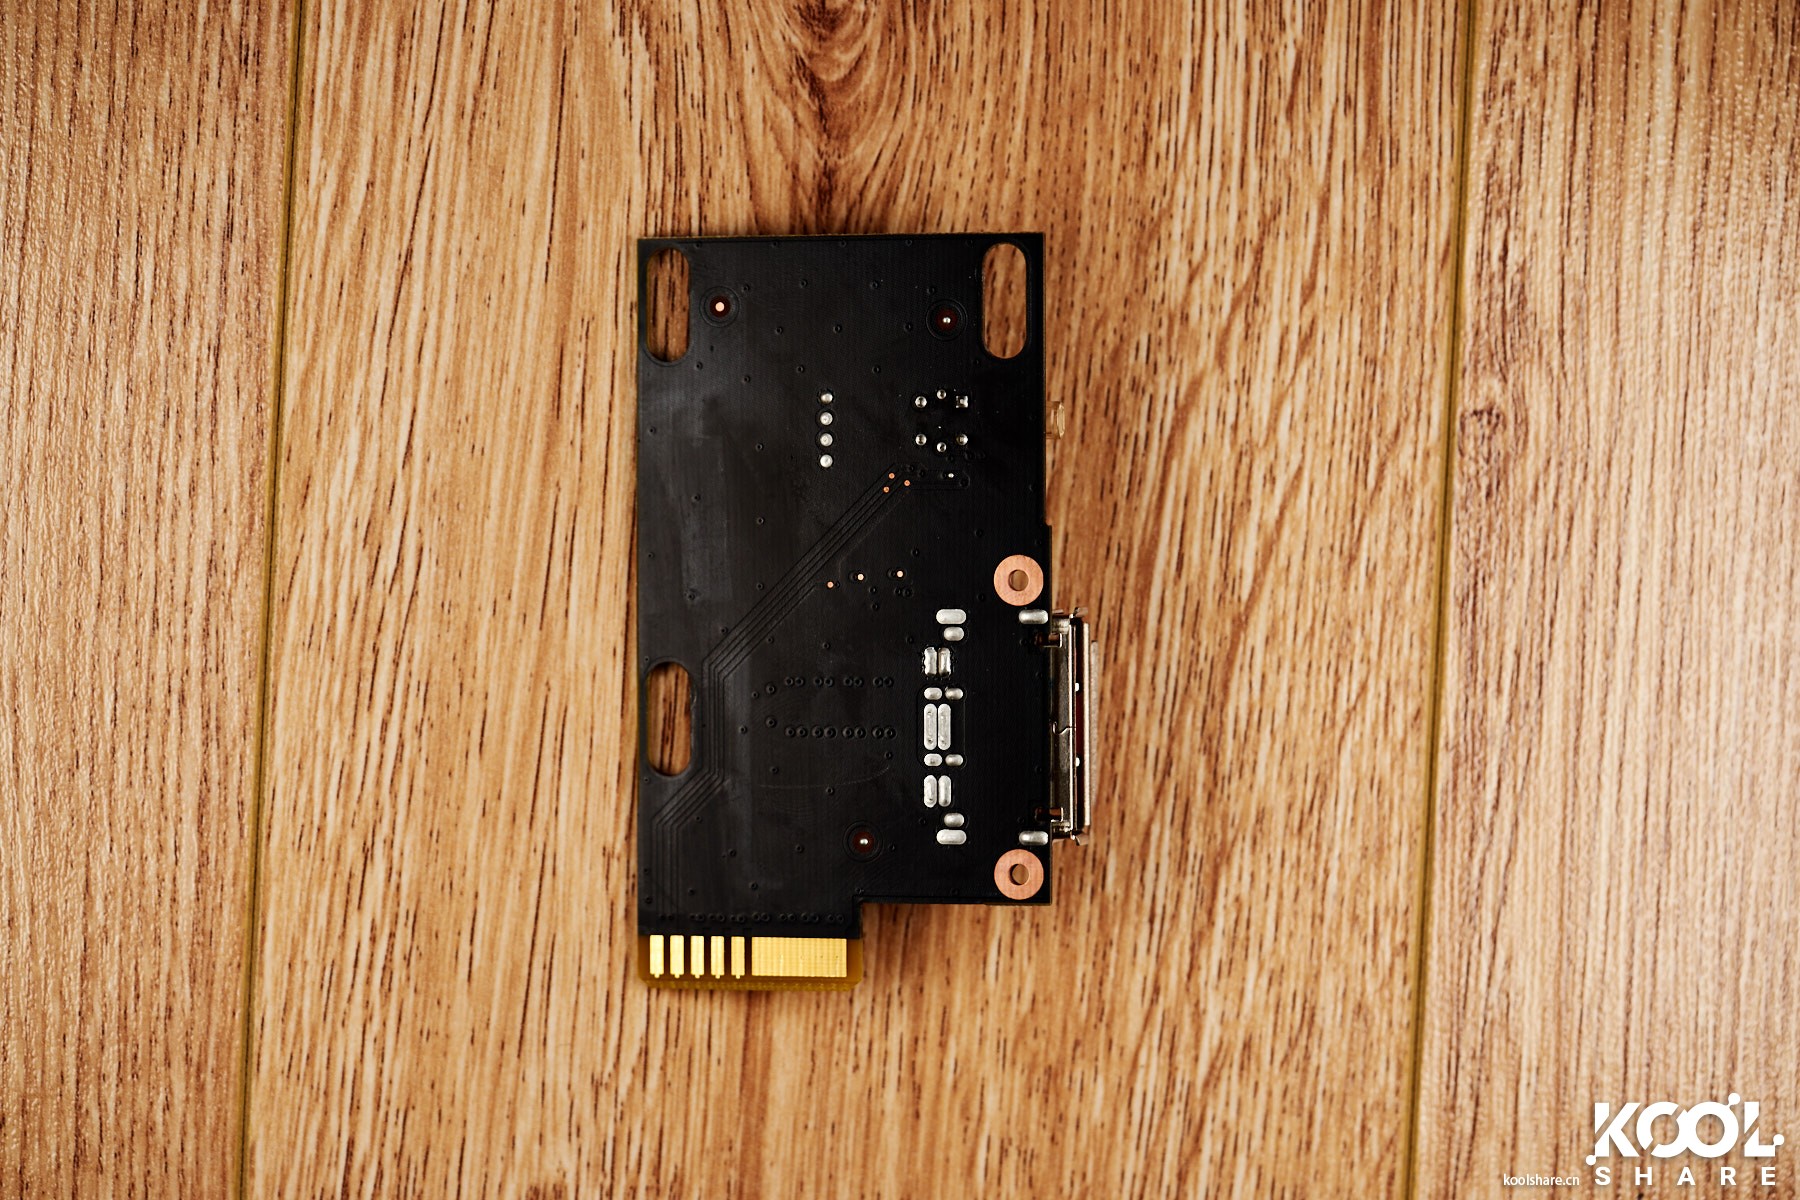 Asus XG-STATION-PRO 雷电3外置显卡盒 评测